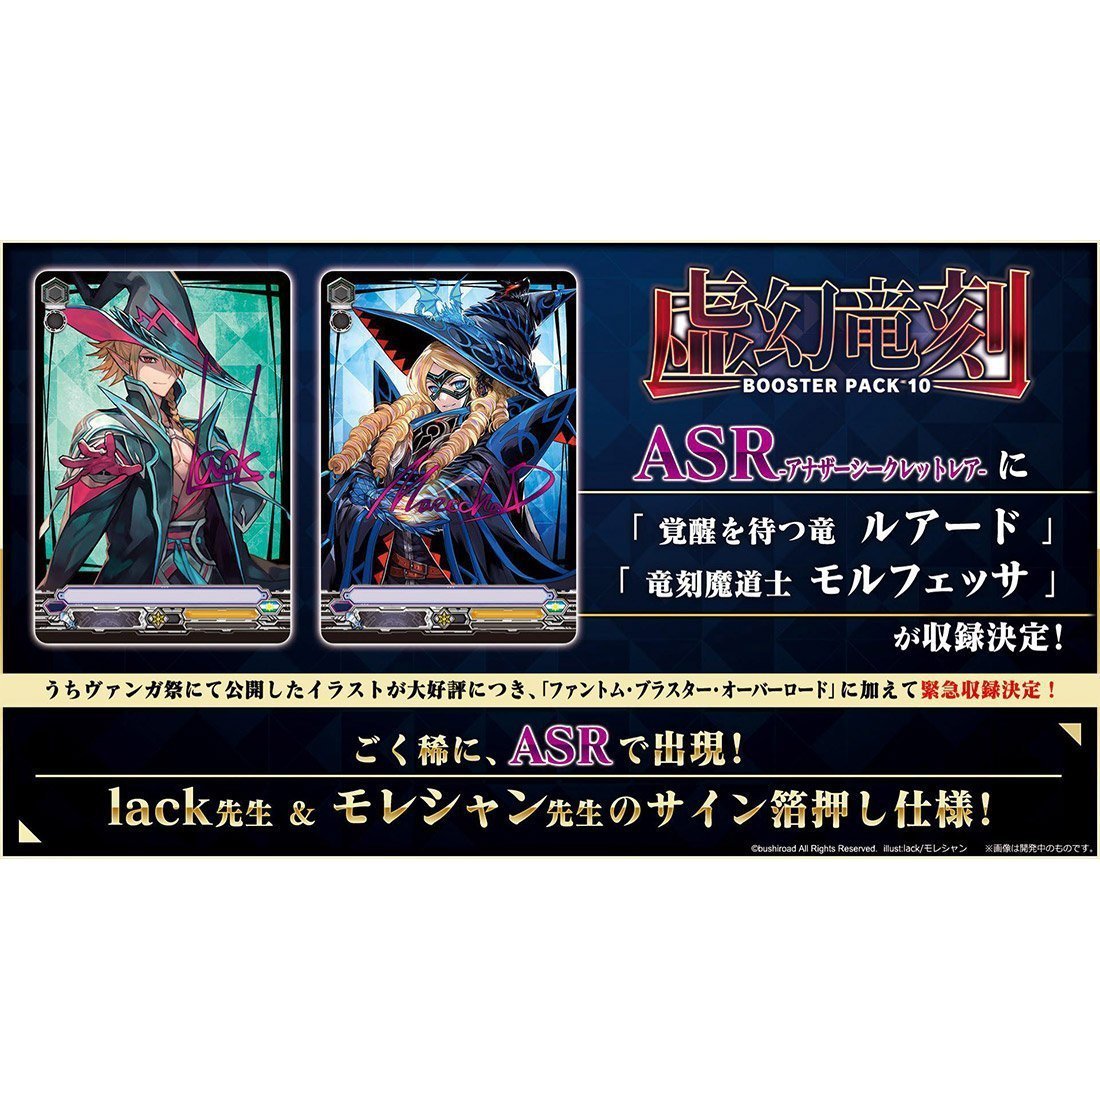 Cardfight!! Vanguard V “Phantom Dragon Aeon” [VG-V-BT10] (Japanese)-Single Pack (Random)-Bushiroad-Ace Cards &amp; Collectibles